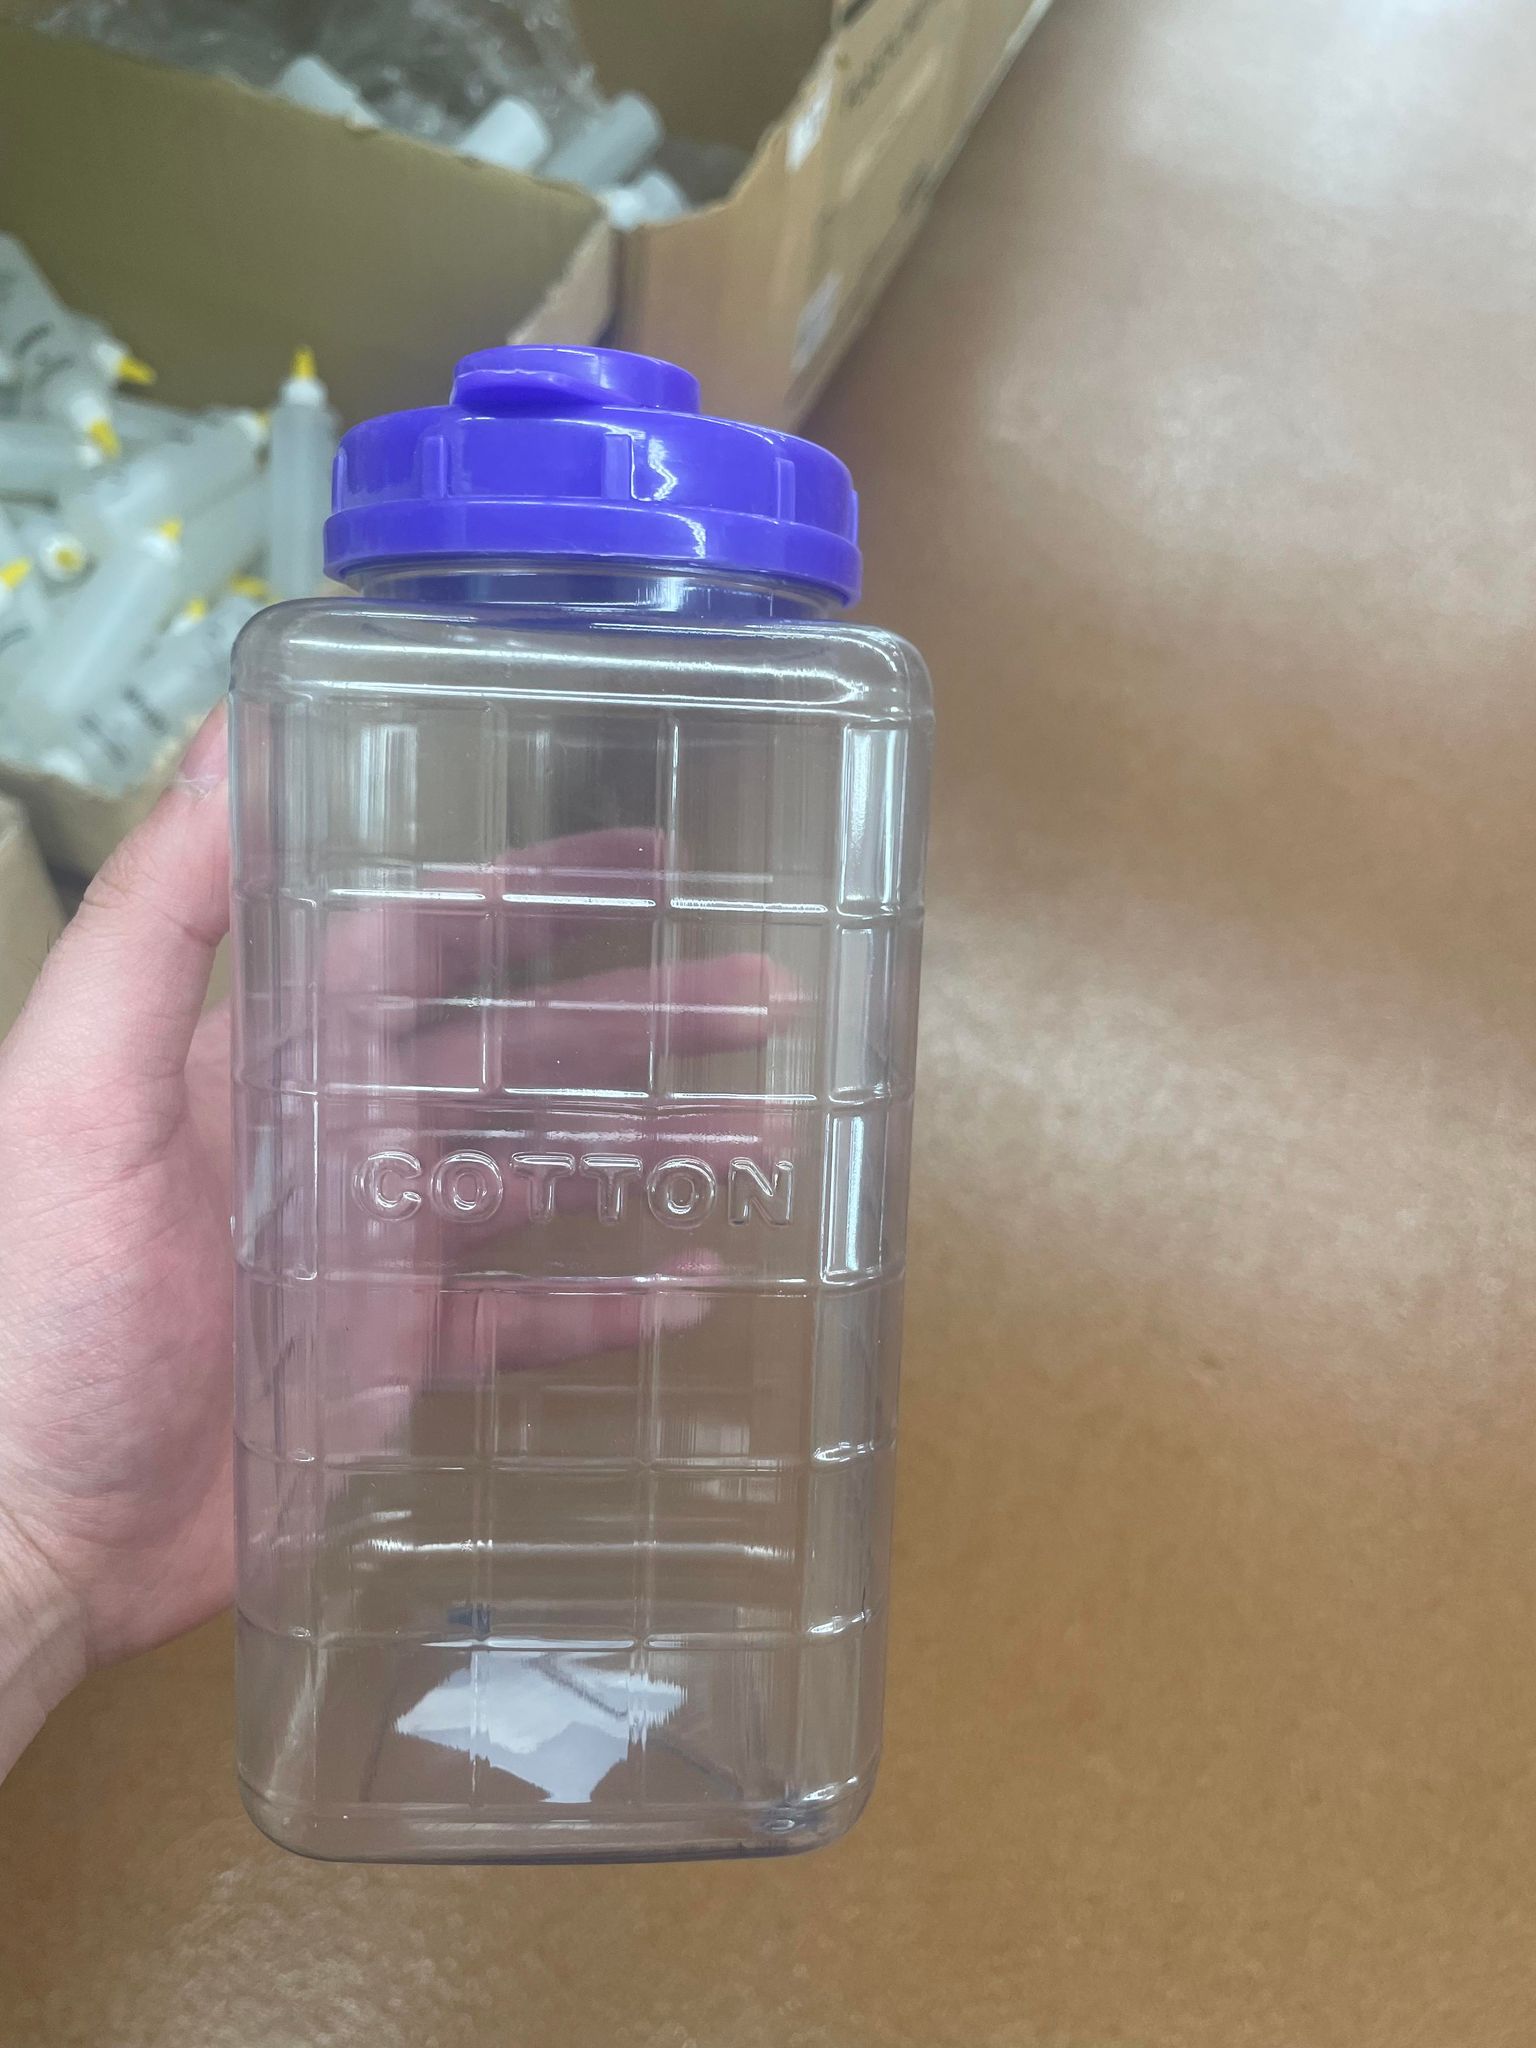 Empty Plastic Bottle with Twist Cap